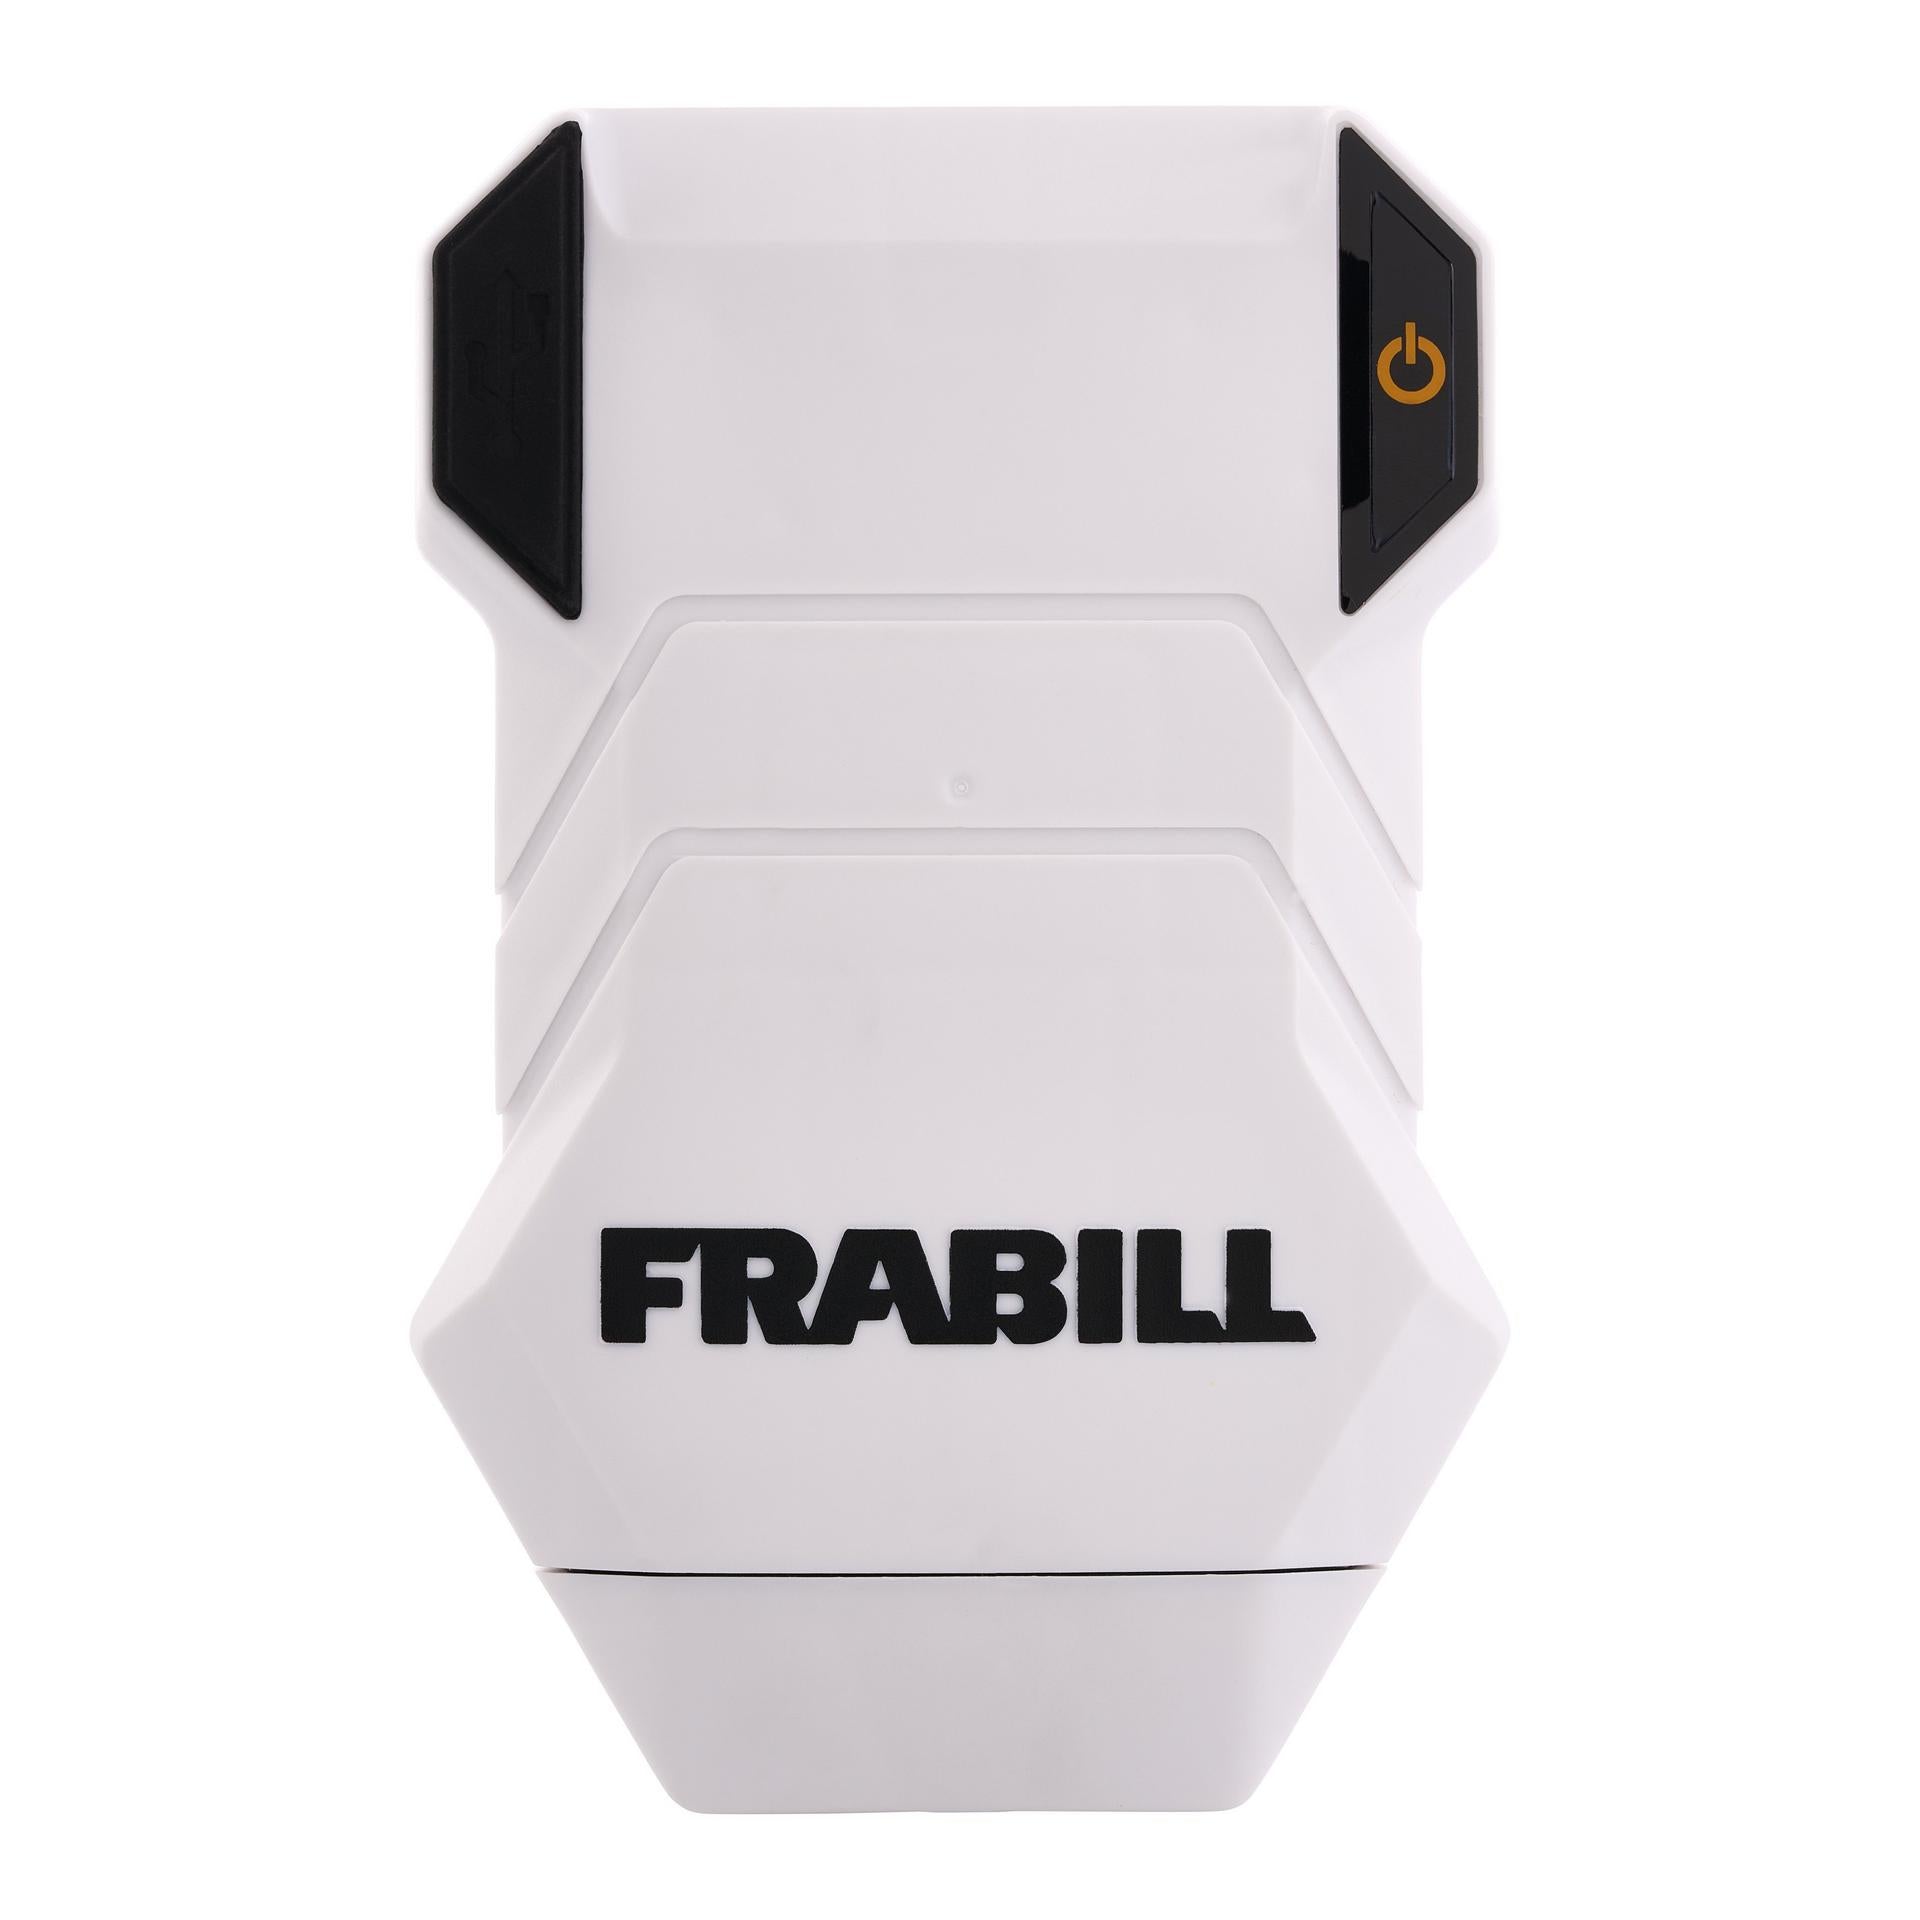 Buy Frabill 9865 Lure Retriever Online Nepal